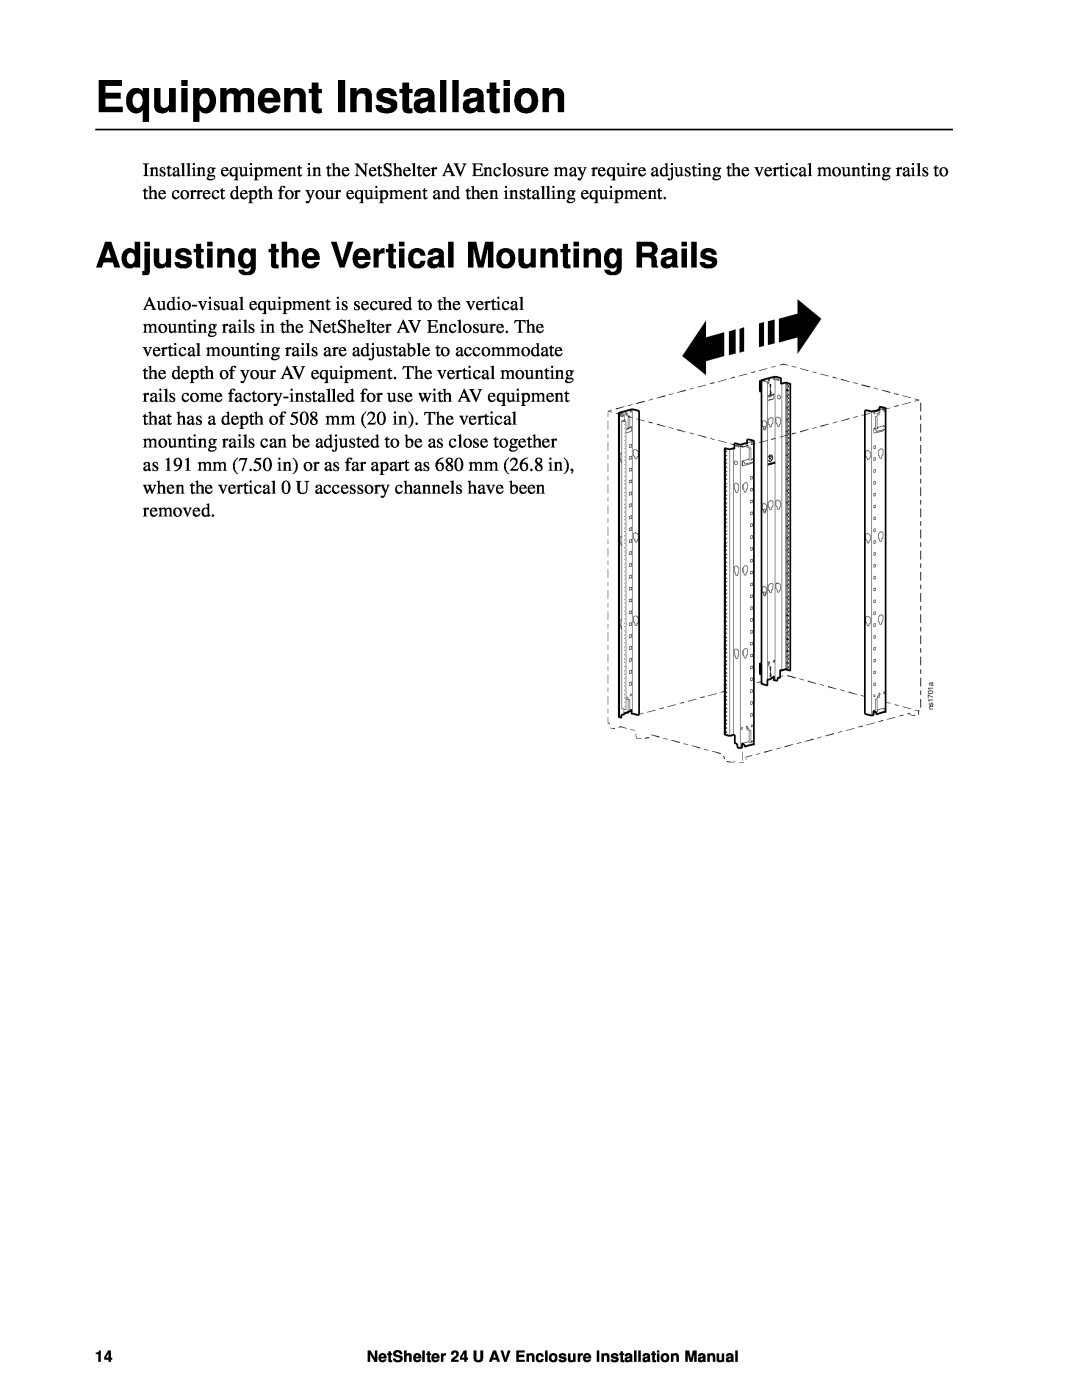 APC AR3814 installation manual Equipment Installation, Adjusting the Vertical Mounting Rails 